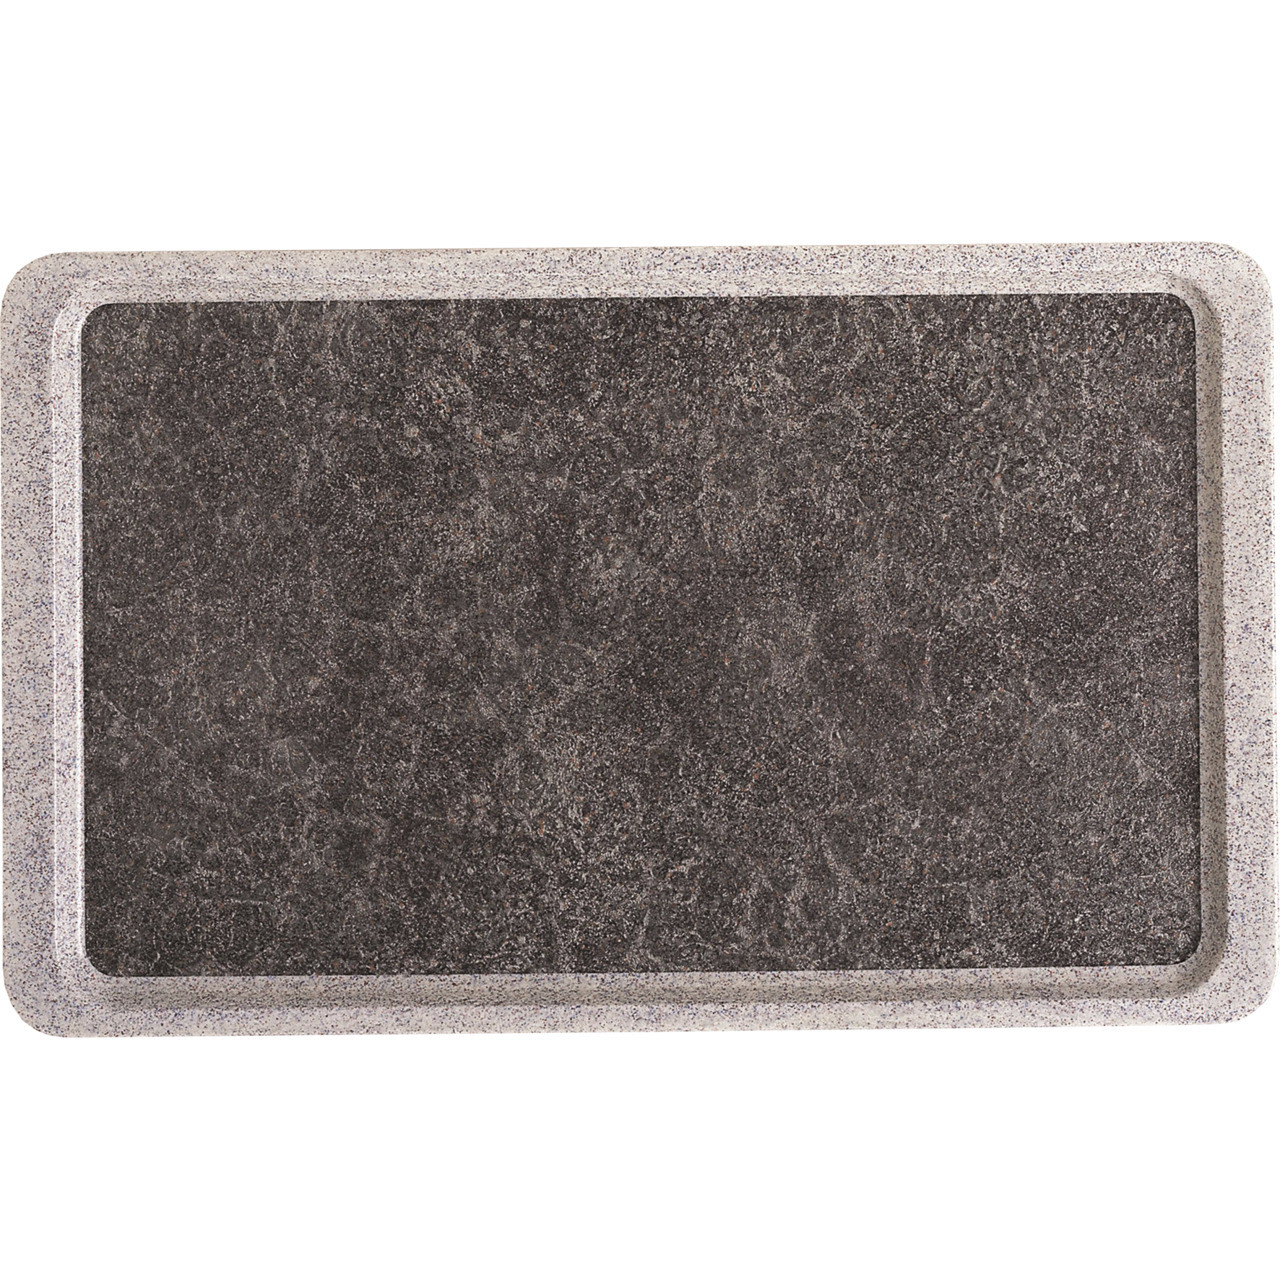 GN-Tablett Polyester Deko glatt GN 1/1 530 x 325 mm Titan auf granit